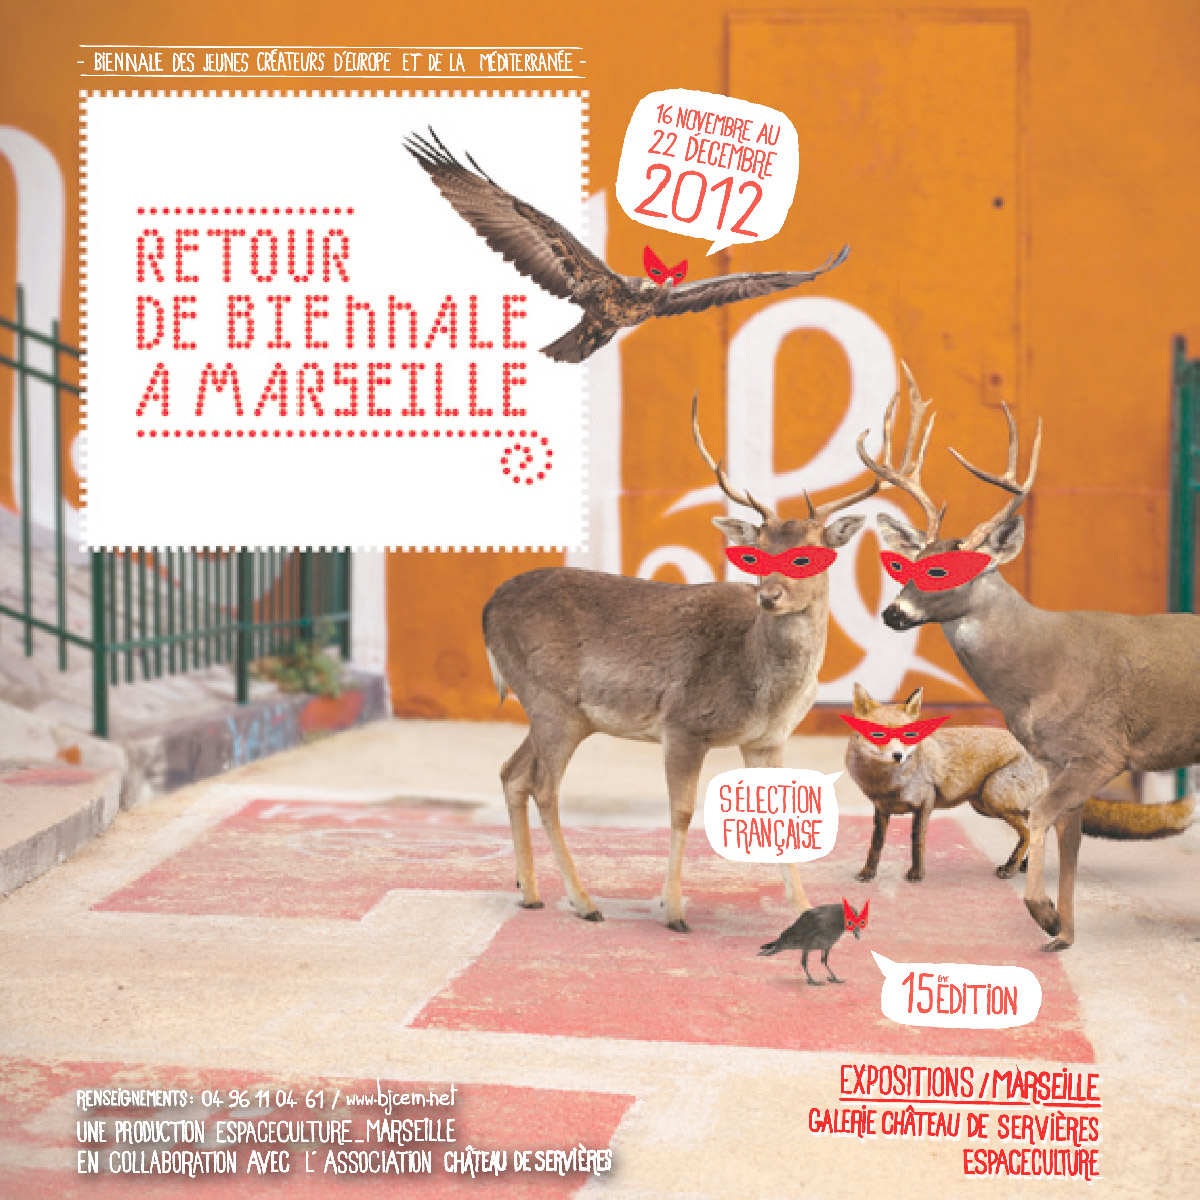 “RETOUR DE BIENNALE” IN MARSEILLE (2012)